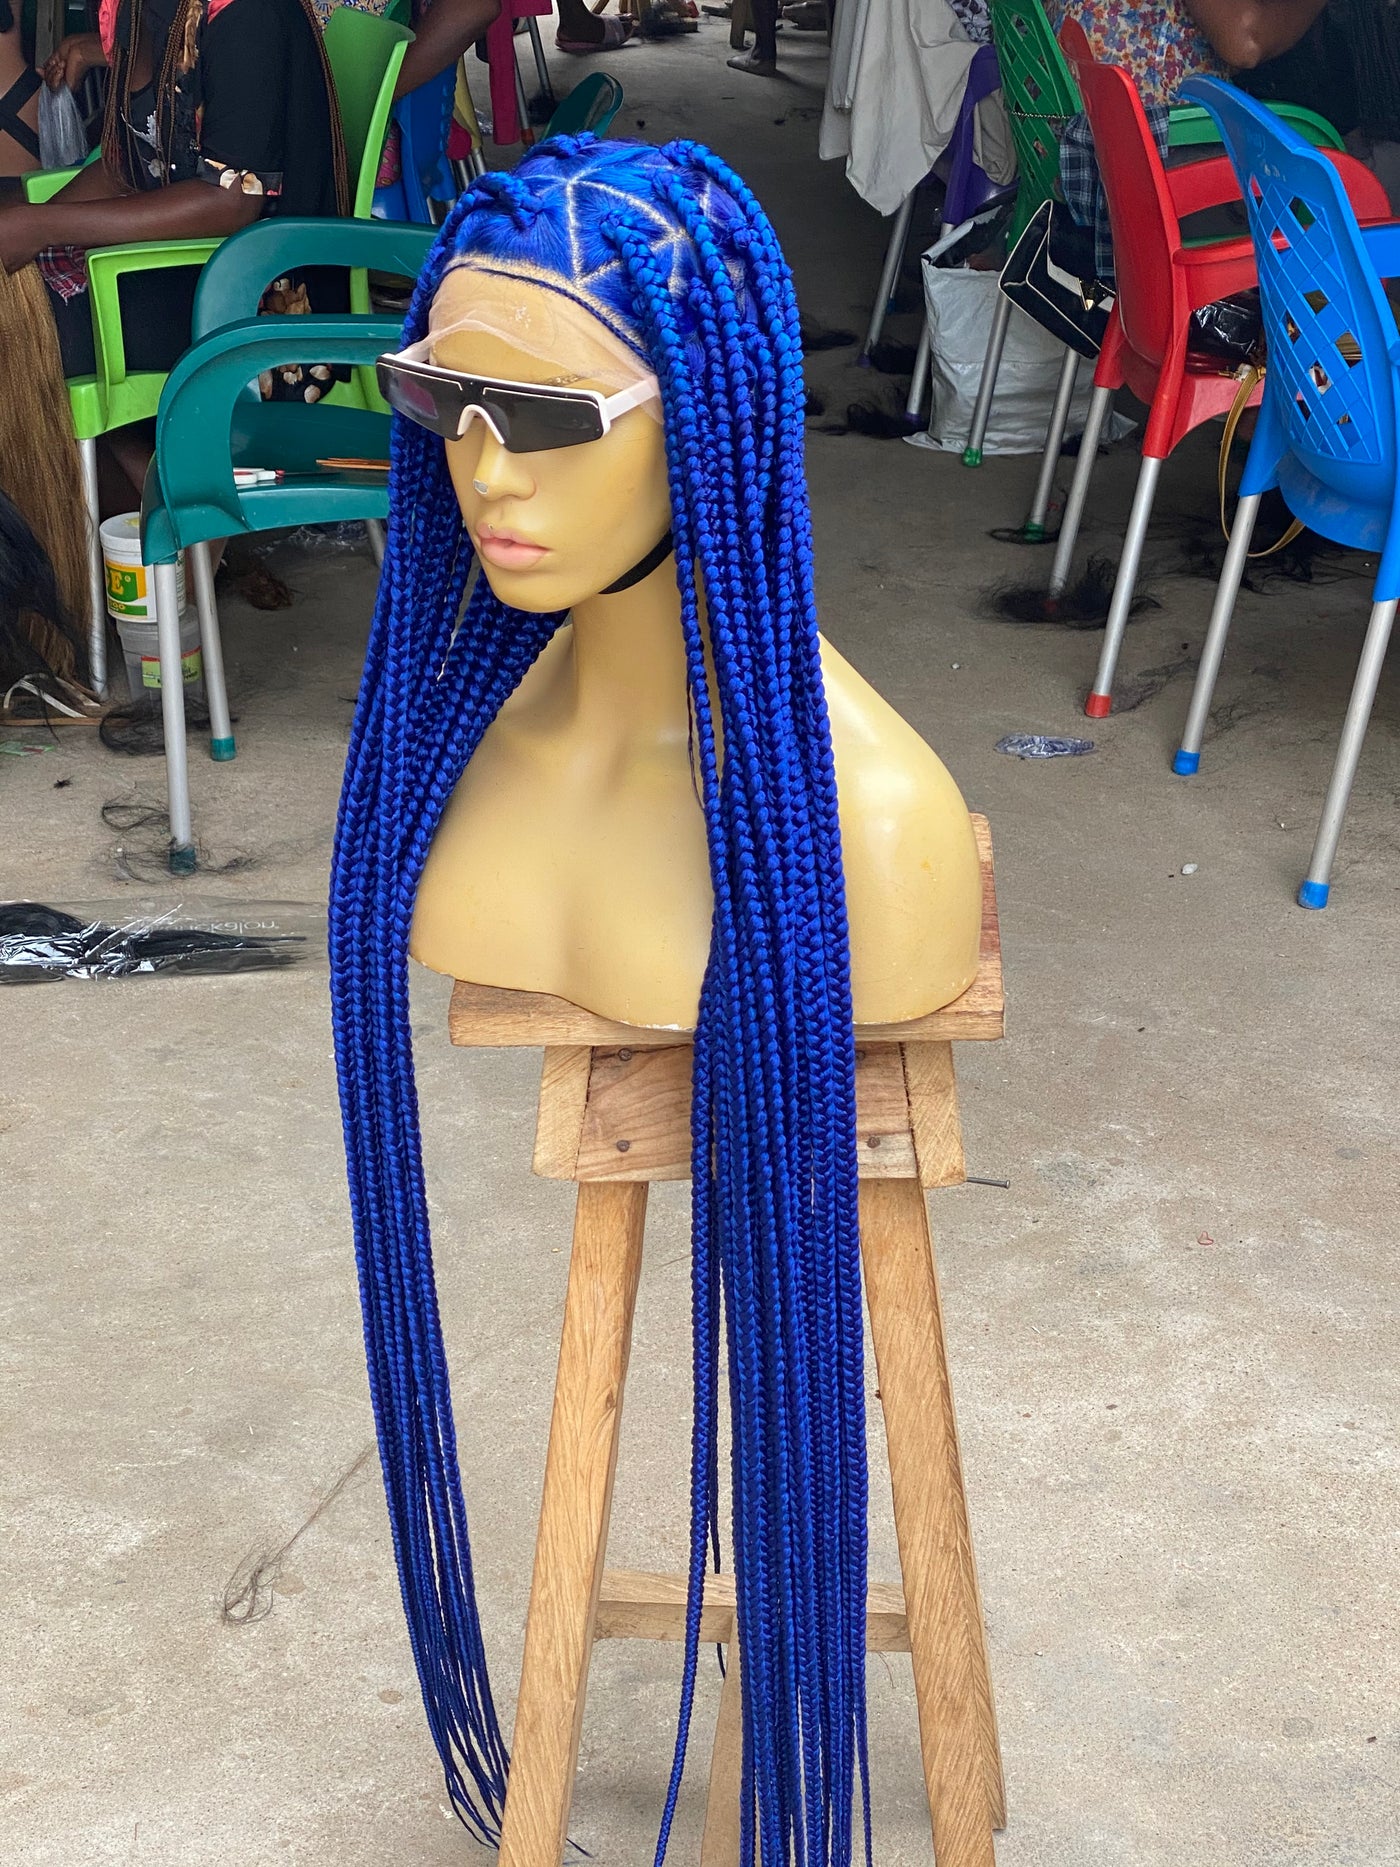 Triangle Jumbo Box Braid Wig Blue Color - Kerinne Poshglad Braided Wigs Jumbo box braid wigs